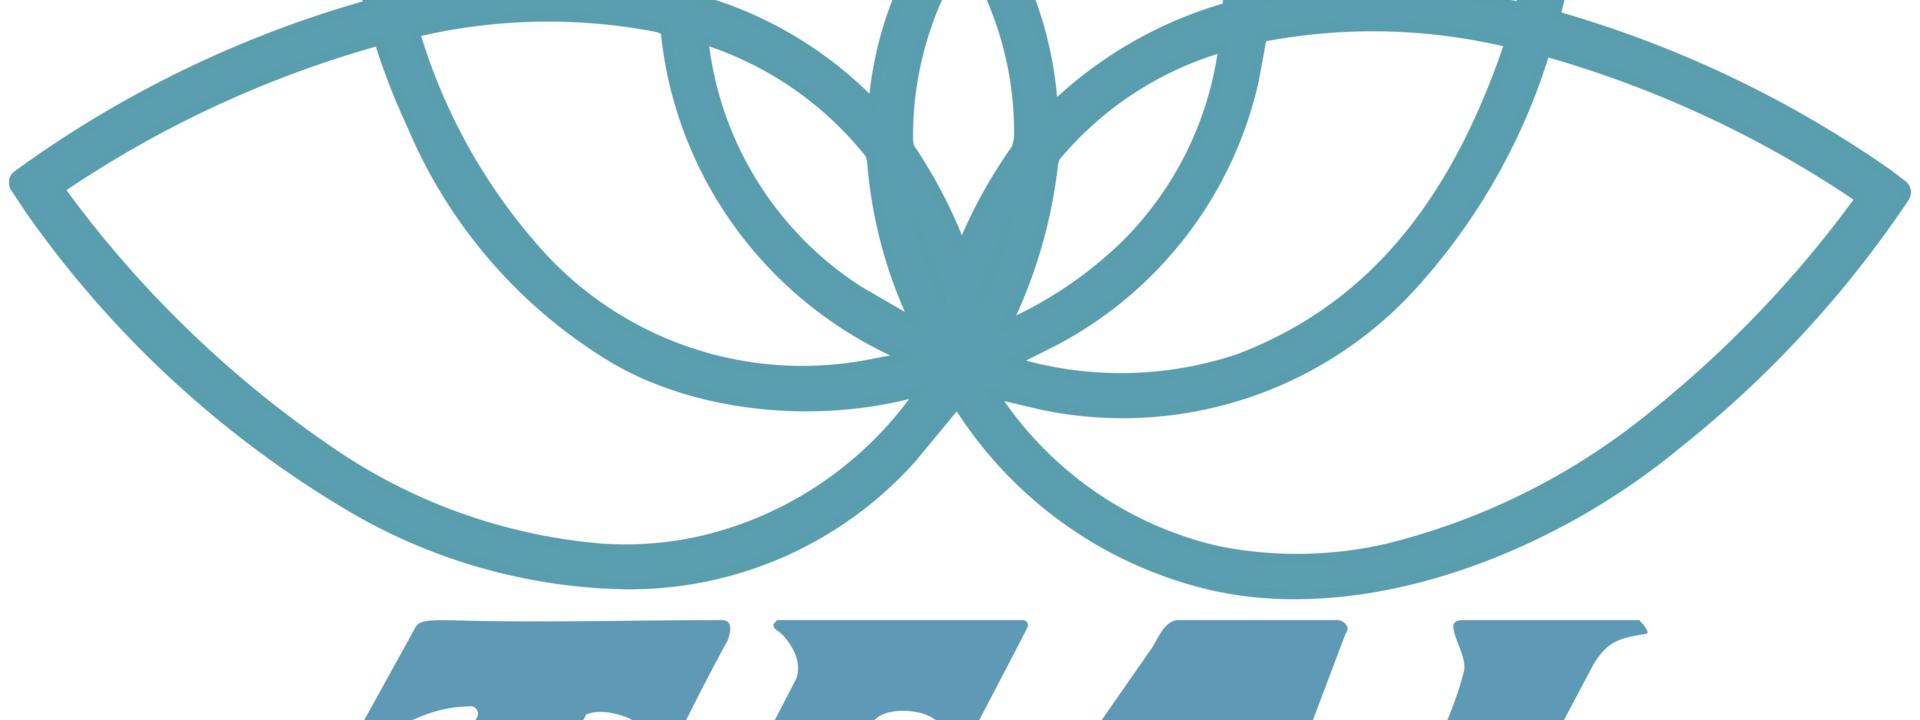 Teal Spa Logo.jpg